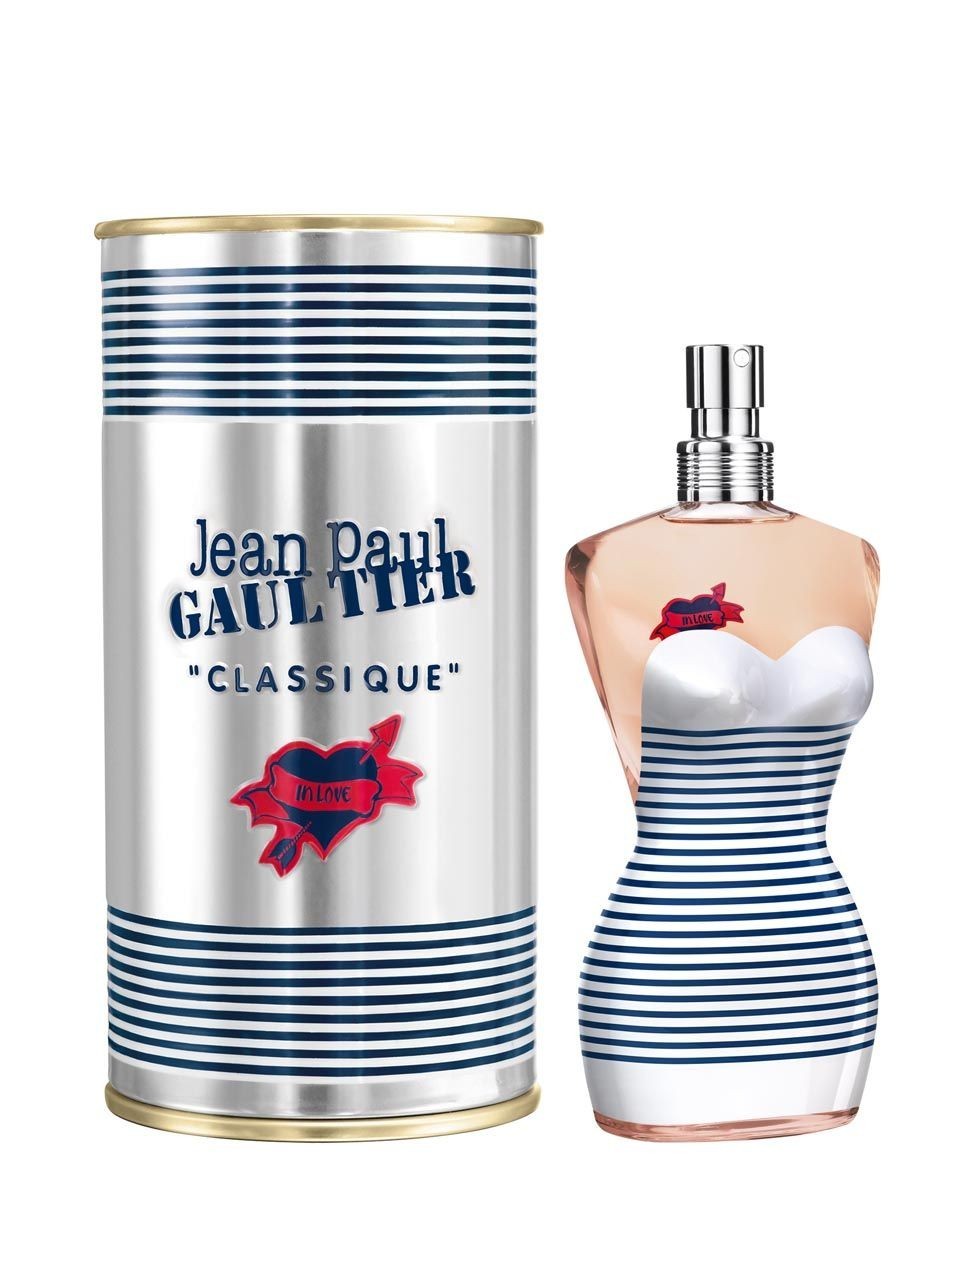 Jean paul gaultier parfum купить. Jean Paul Gaultier туалетная вода. Jean Paul Gaultier classique 100ml EDT.